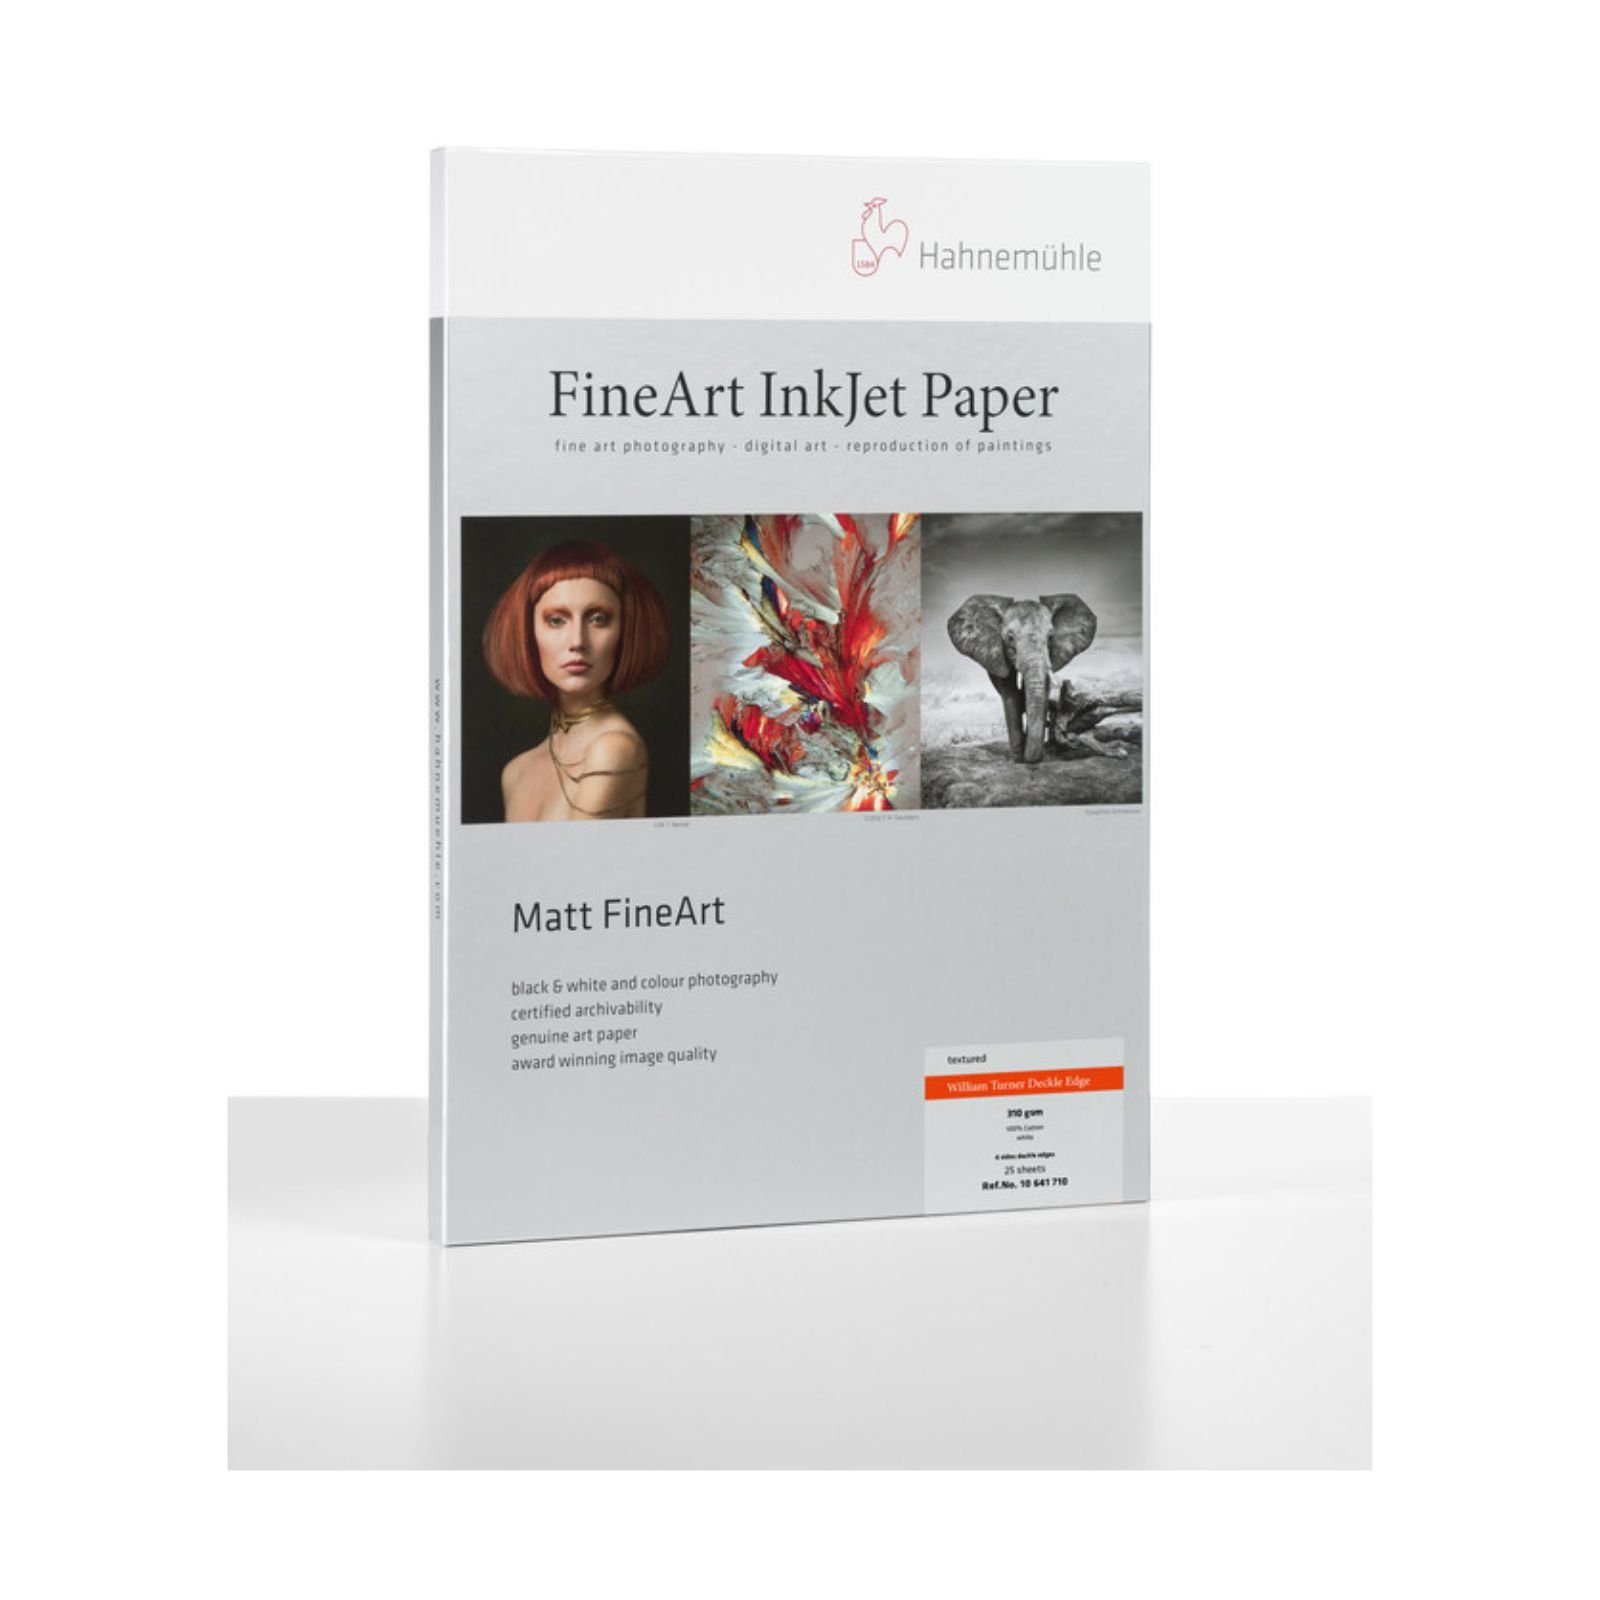 Hahnemühle Fotopapier William Turner Deckle Edge FineArt Inkjet-Papier - 4-seitig gerissene